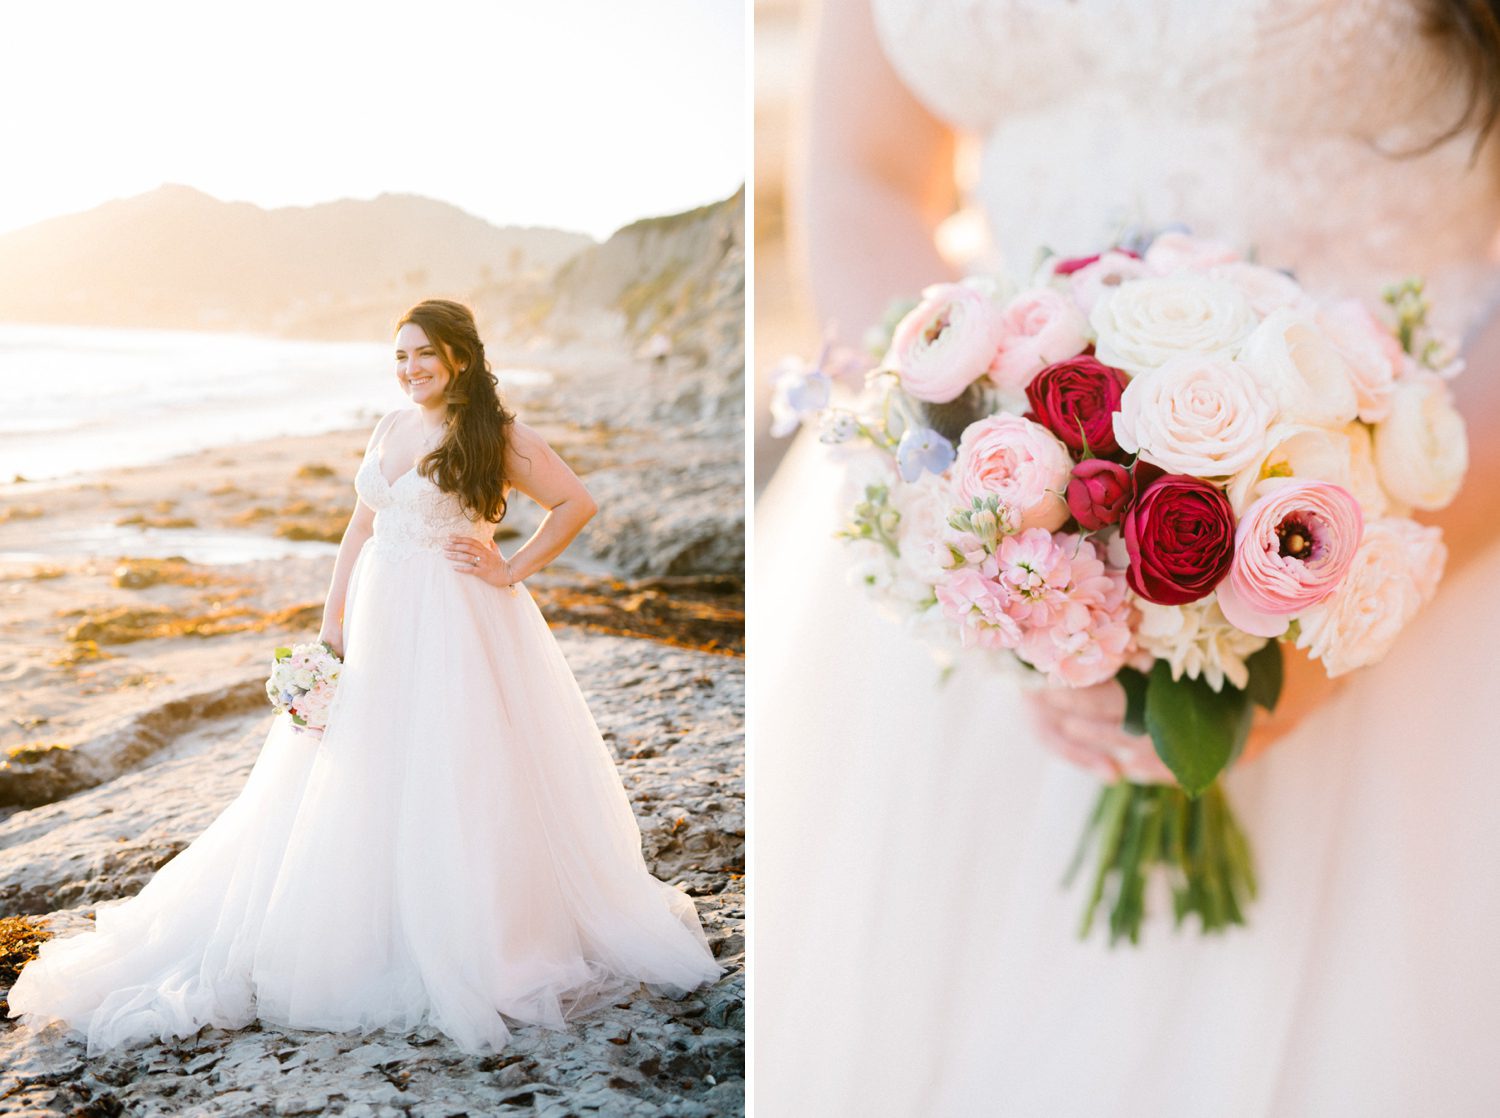 Stunning bride in fairytale dress at Cliffs Hotel Wedding by Pismo Beach Wedding Photographer Austyn Elizabeth Photography